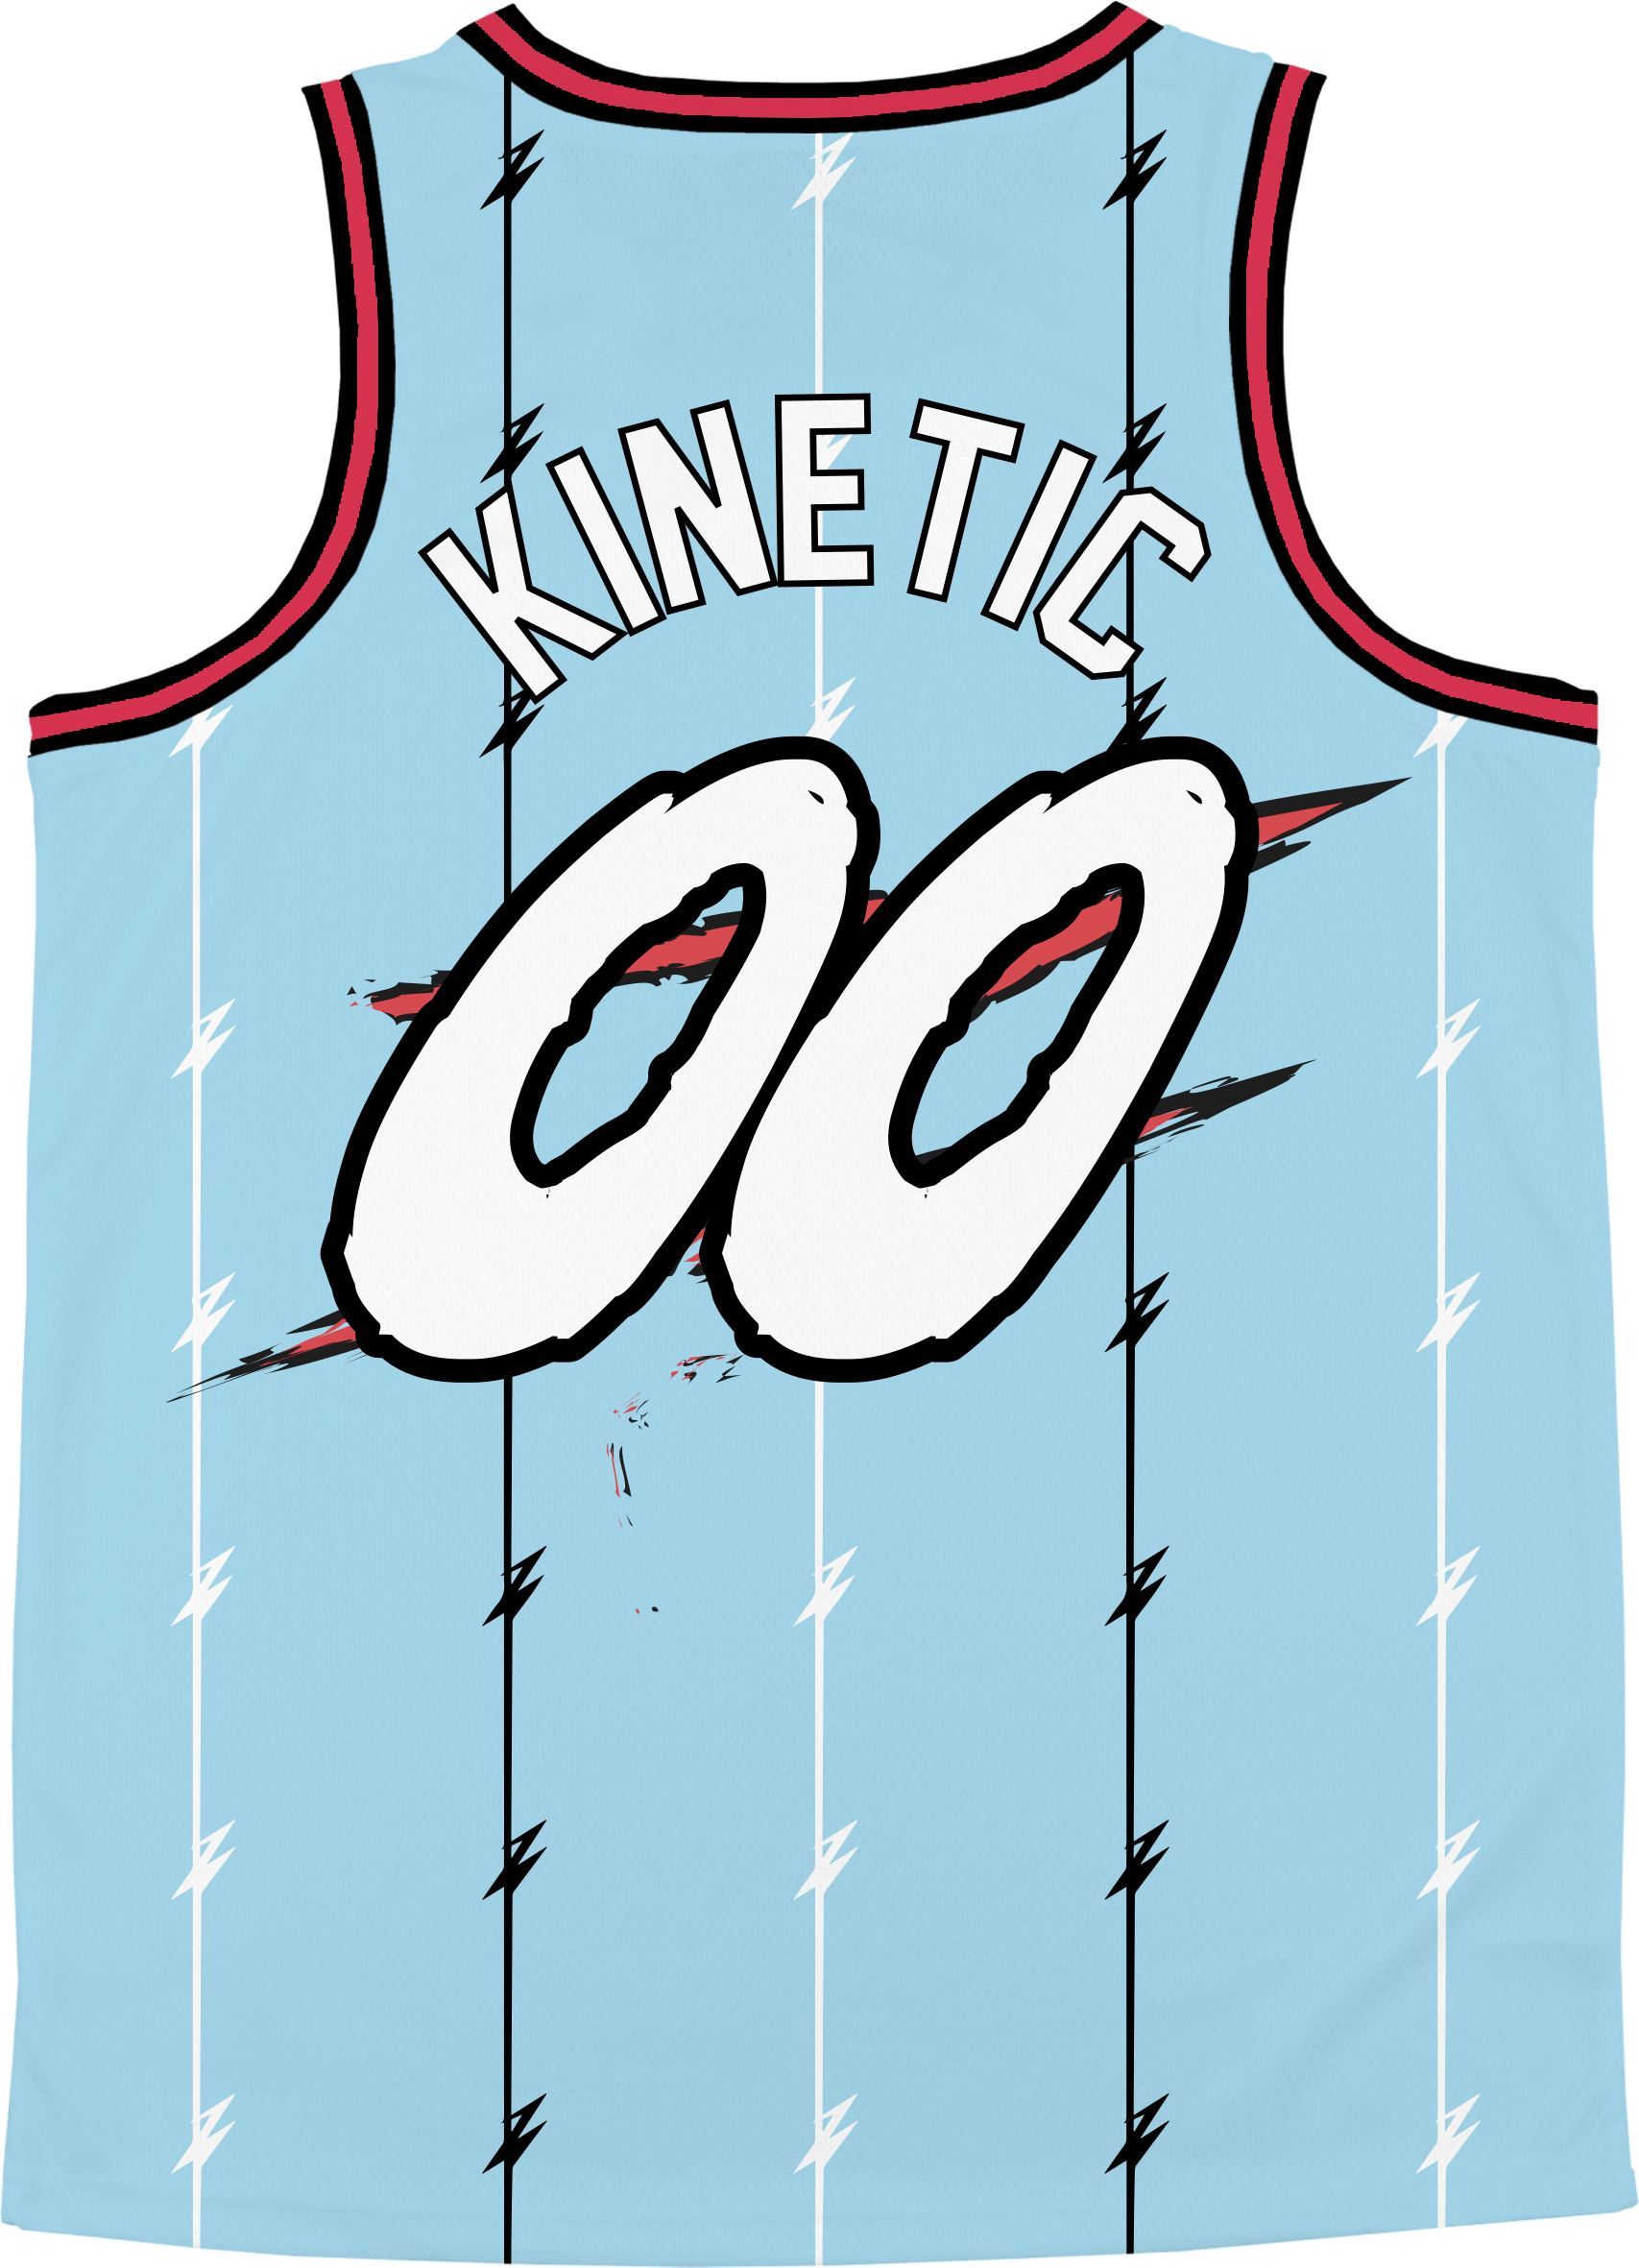 Acacia - Atlantis Basketball Jersey - Kinetic Society